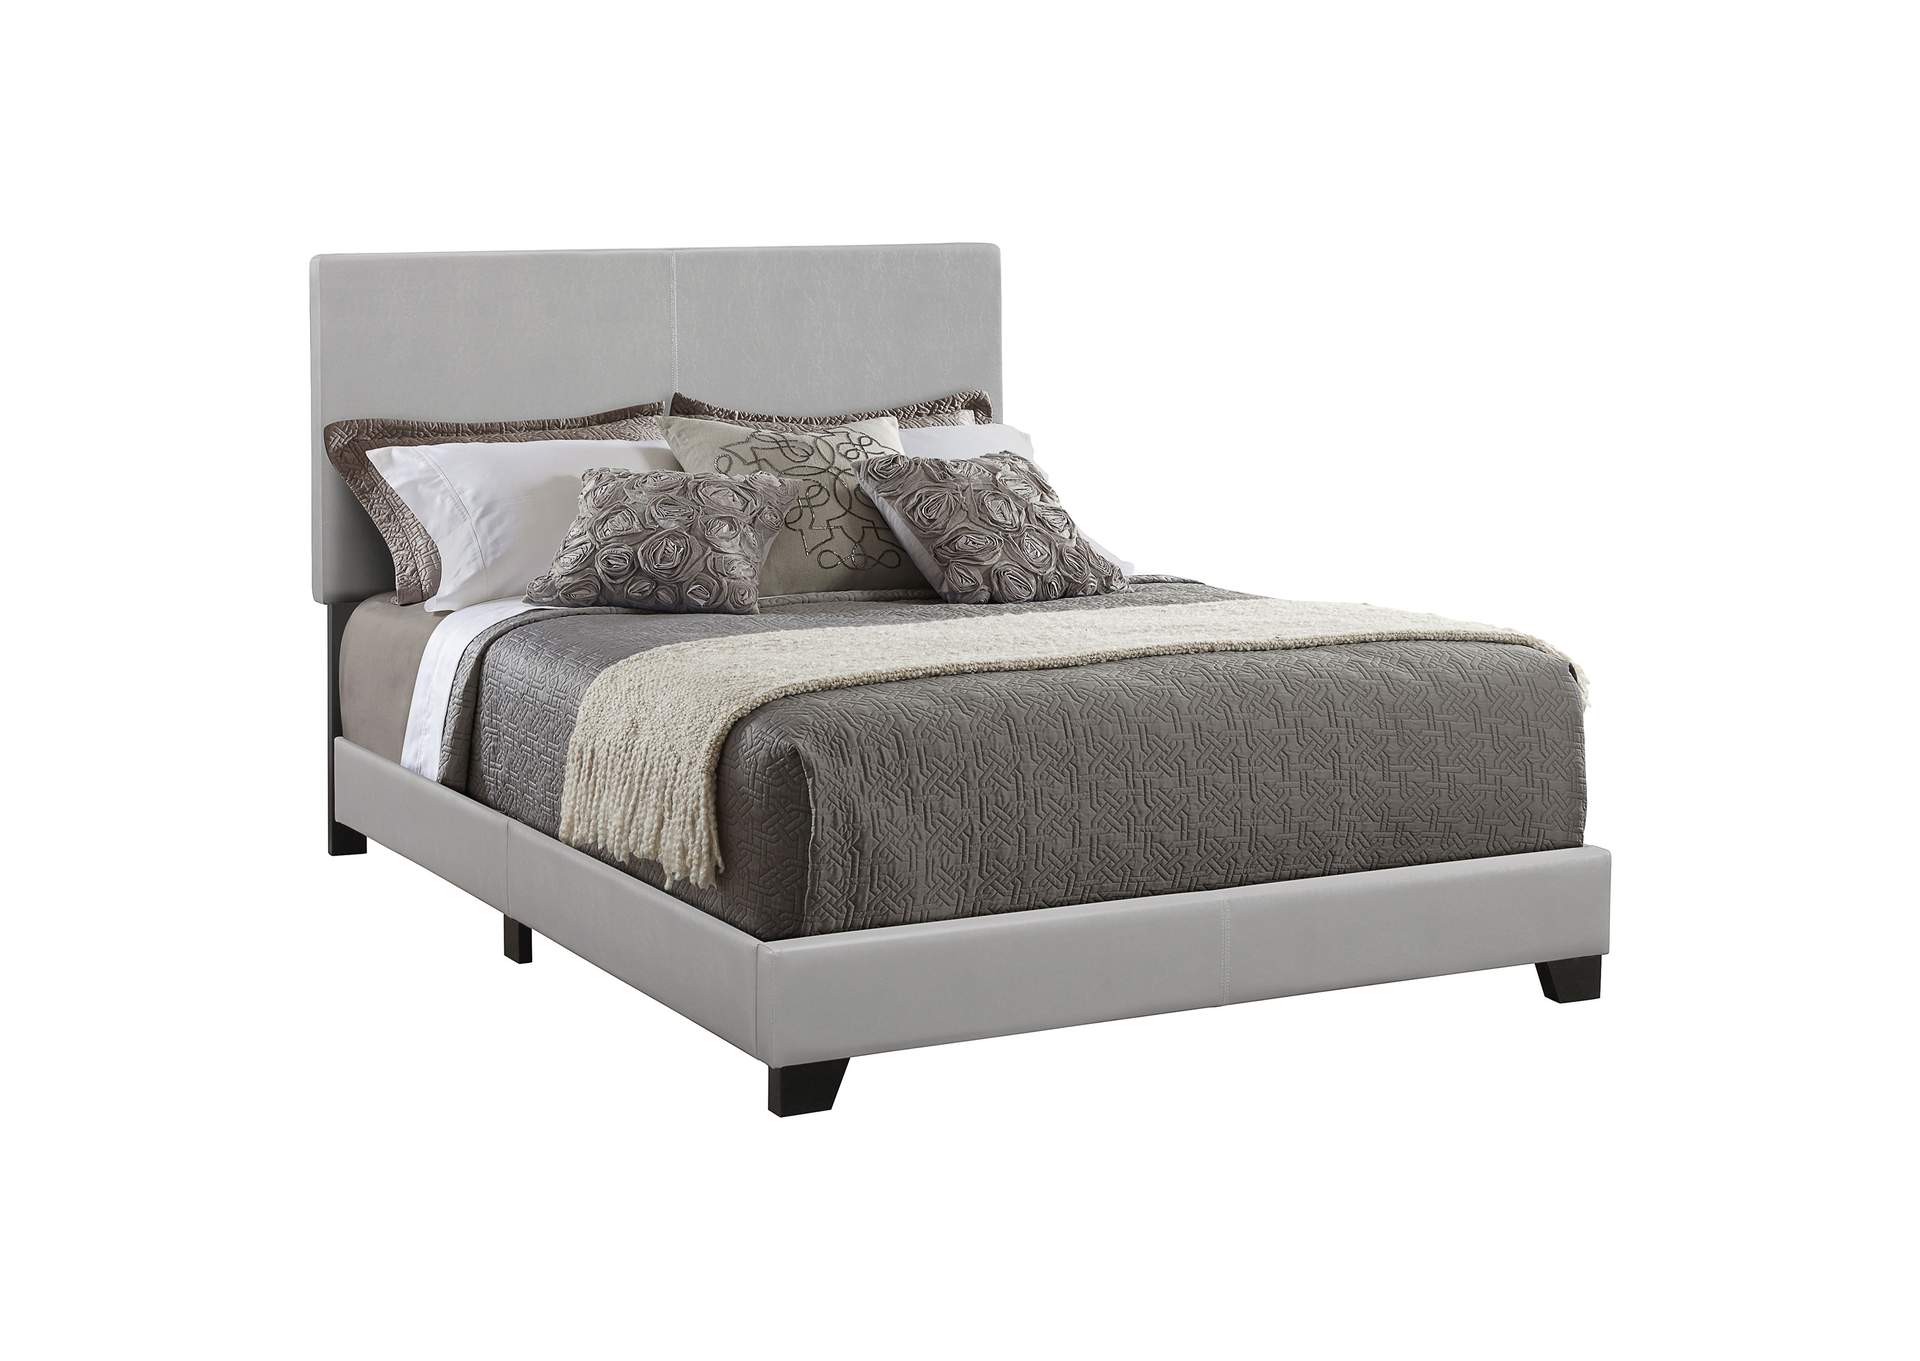 Dorian Upholstered Queen Bed Grey,Coaster Furniture